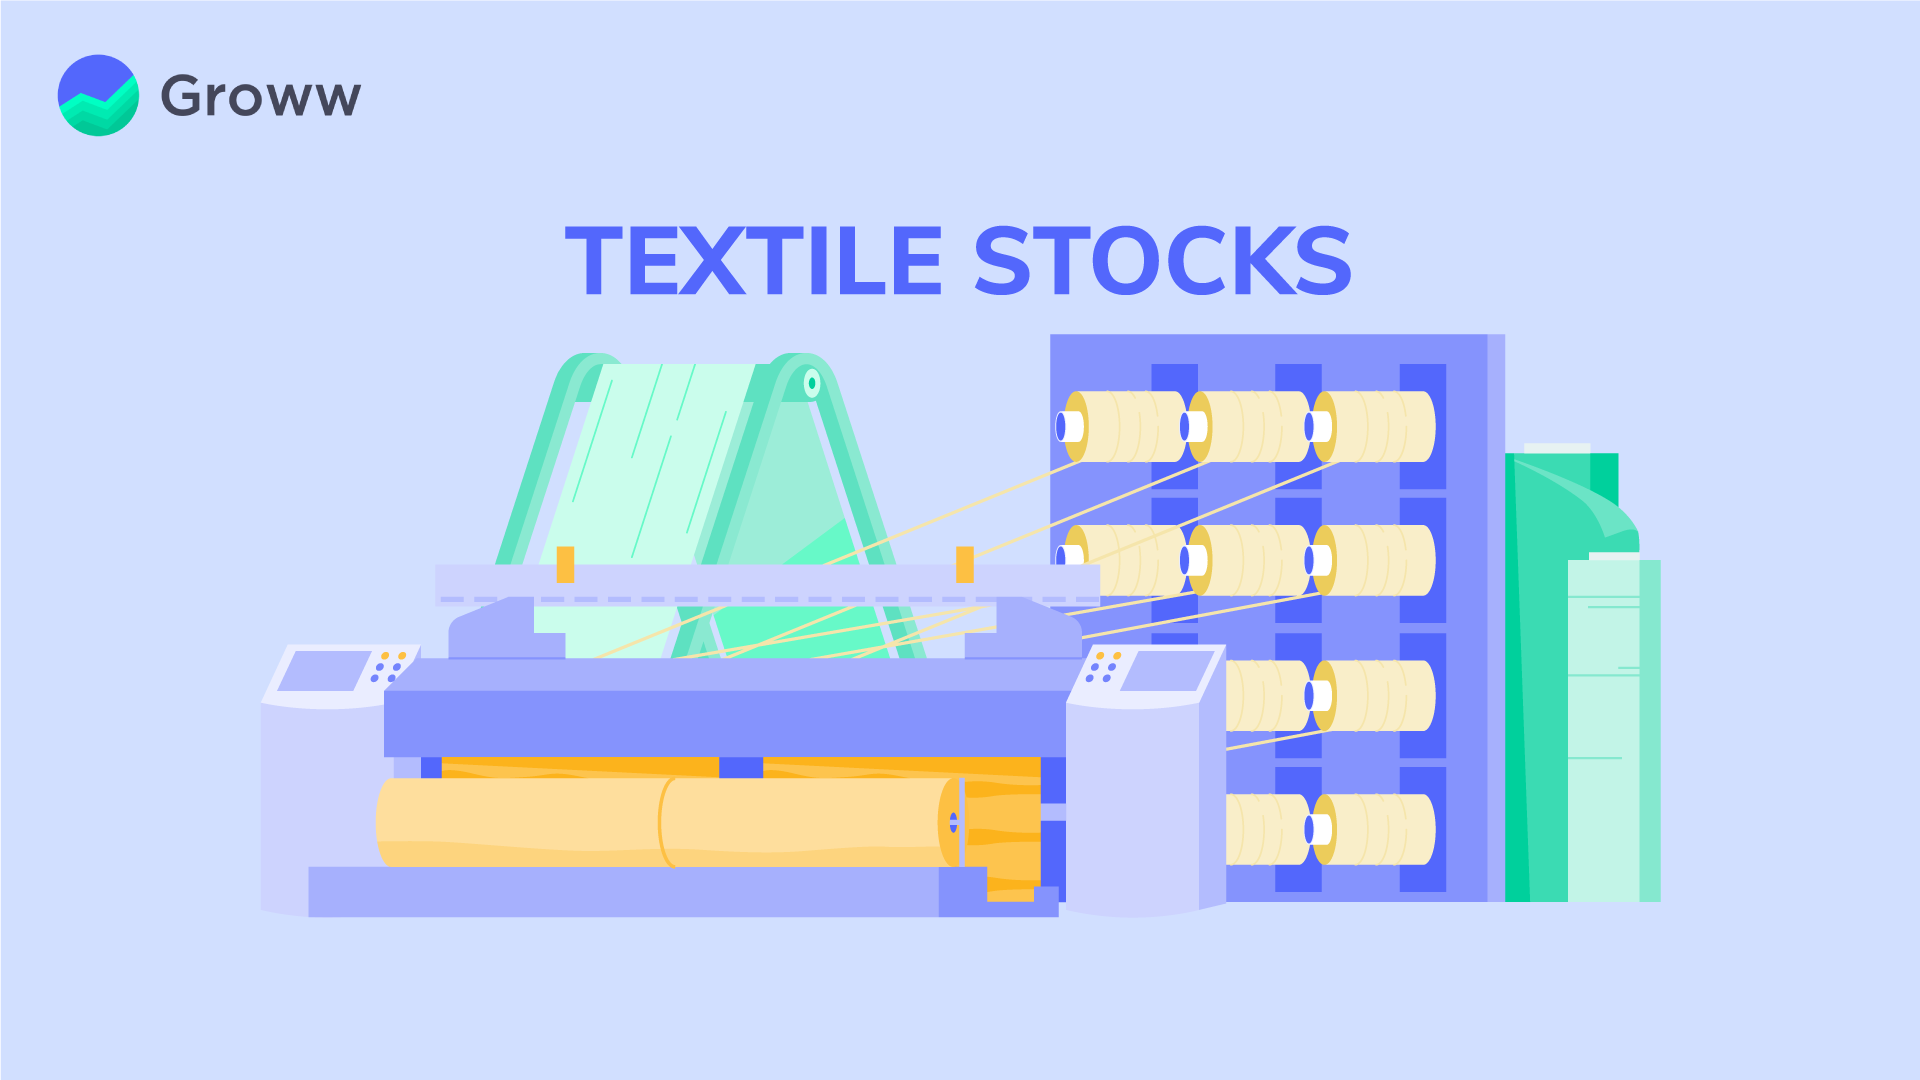 Best Textile Stocks in India